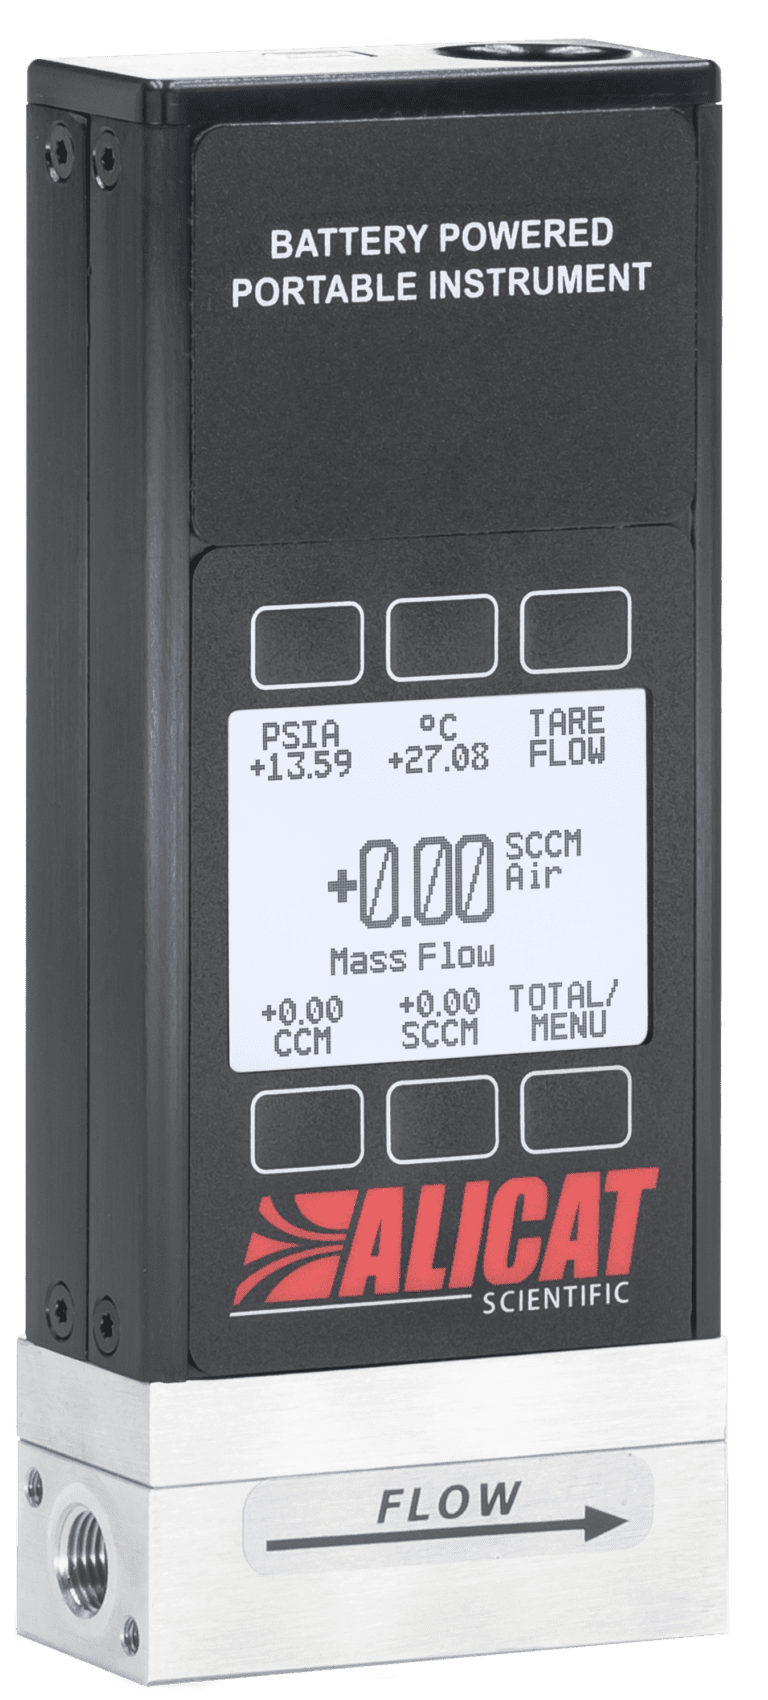 Portable Alicat device